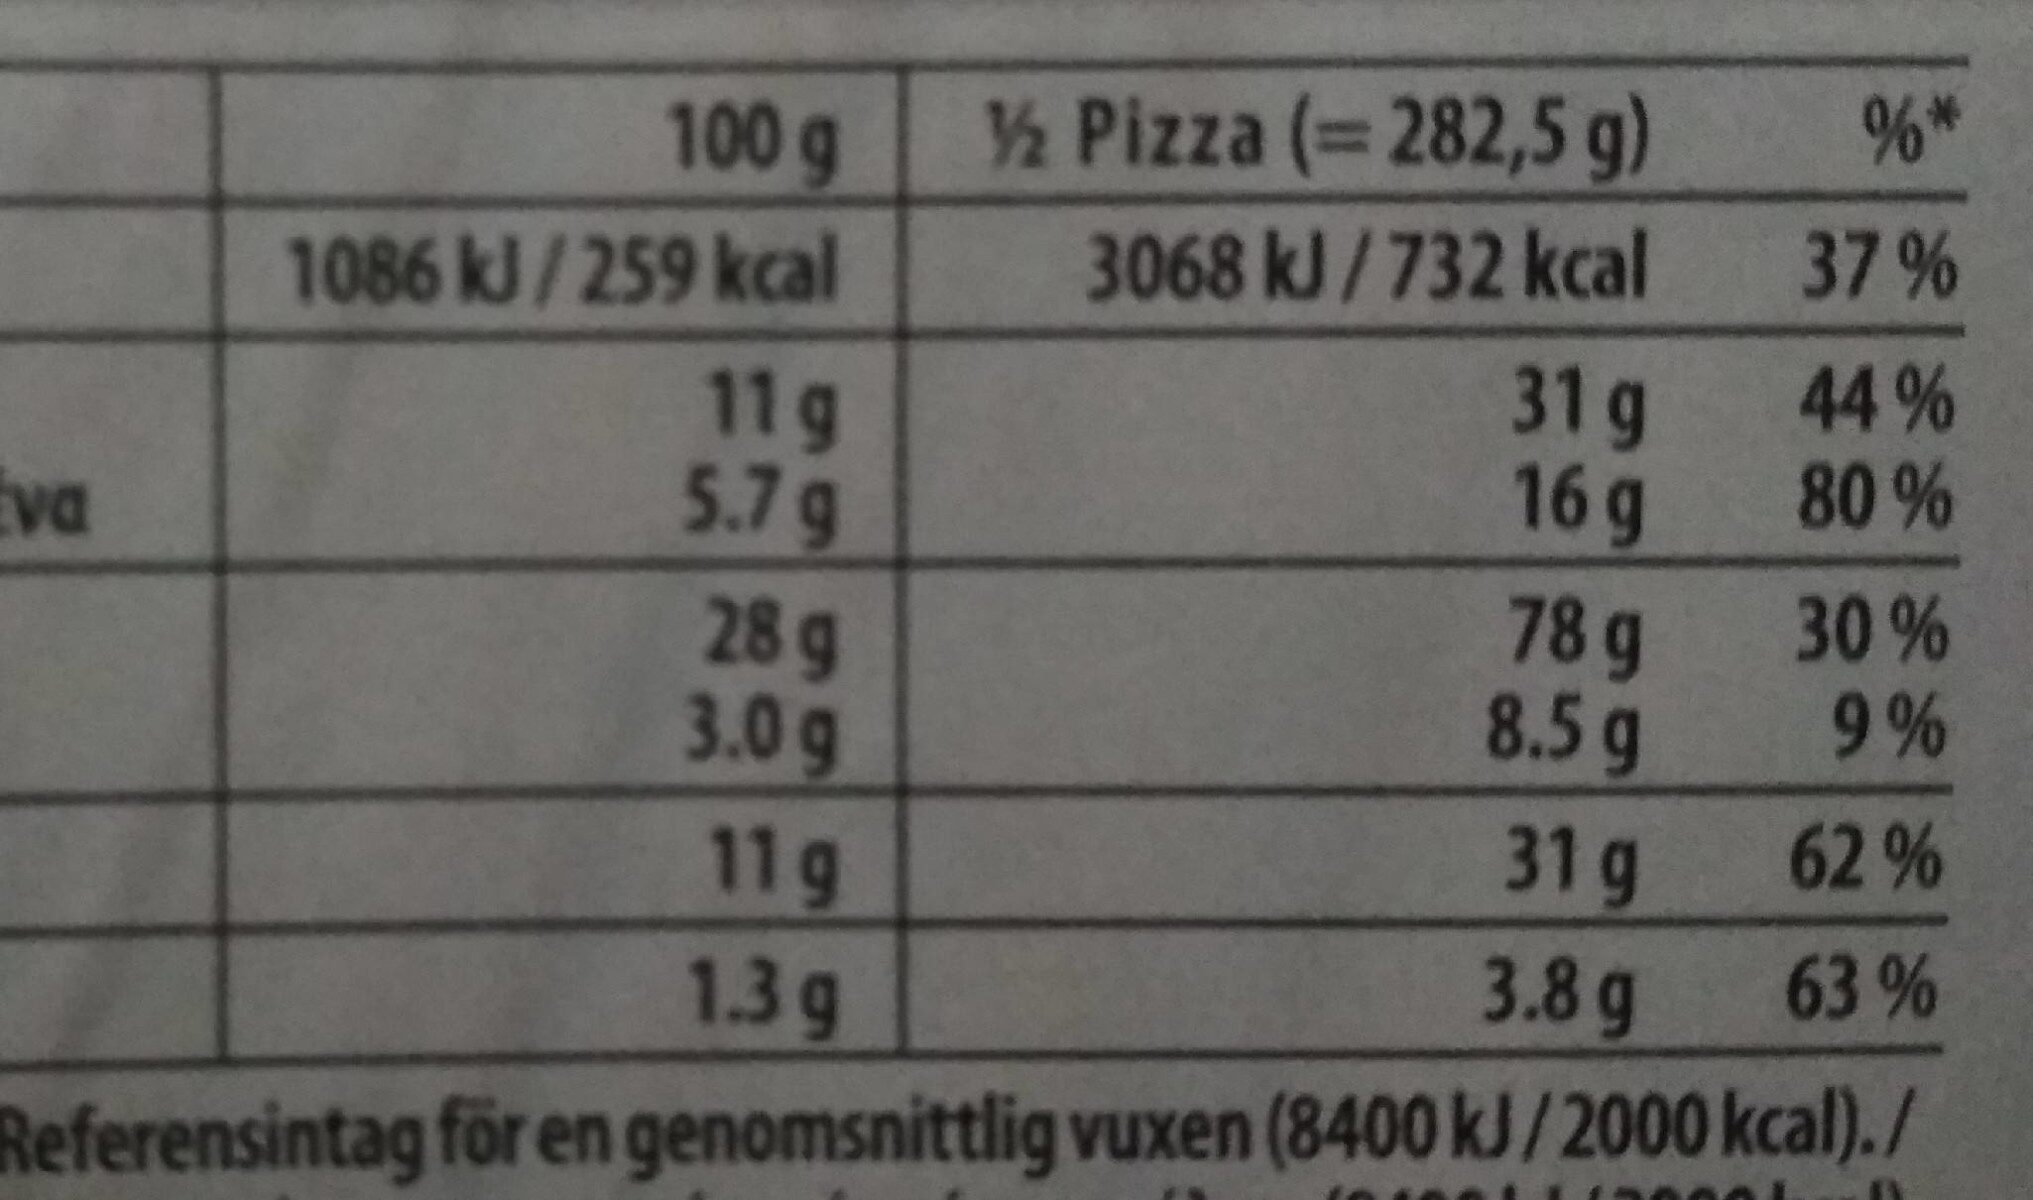 Rústica pizza doble pepperoni queso cheddar y mozzarella - Ravintosisältö - fi